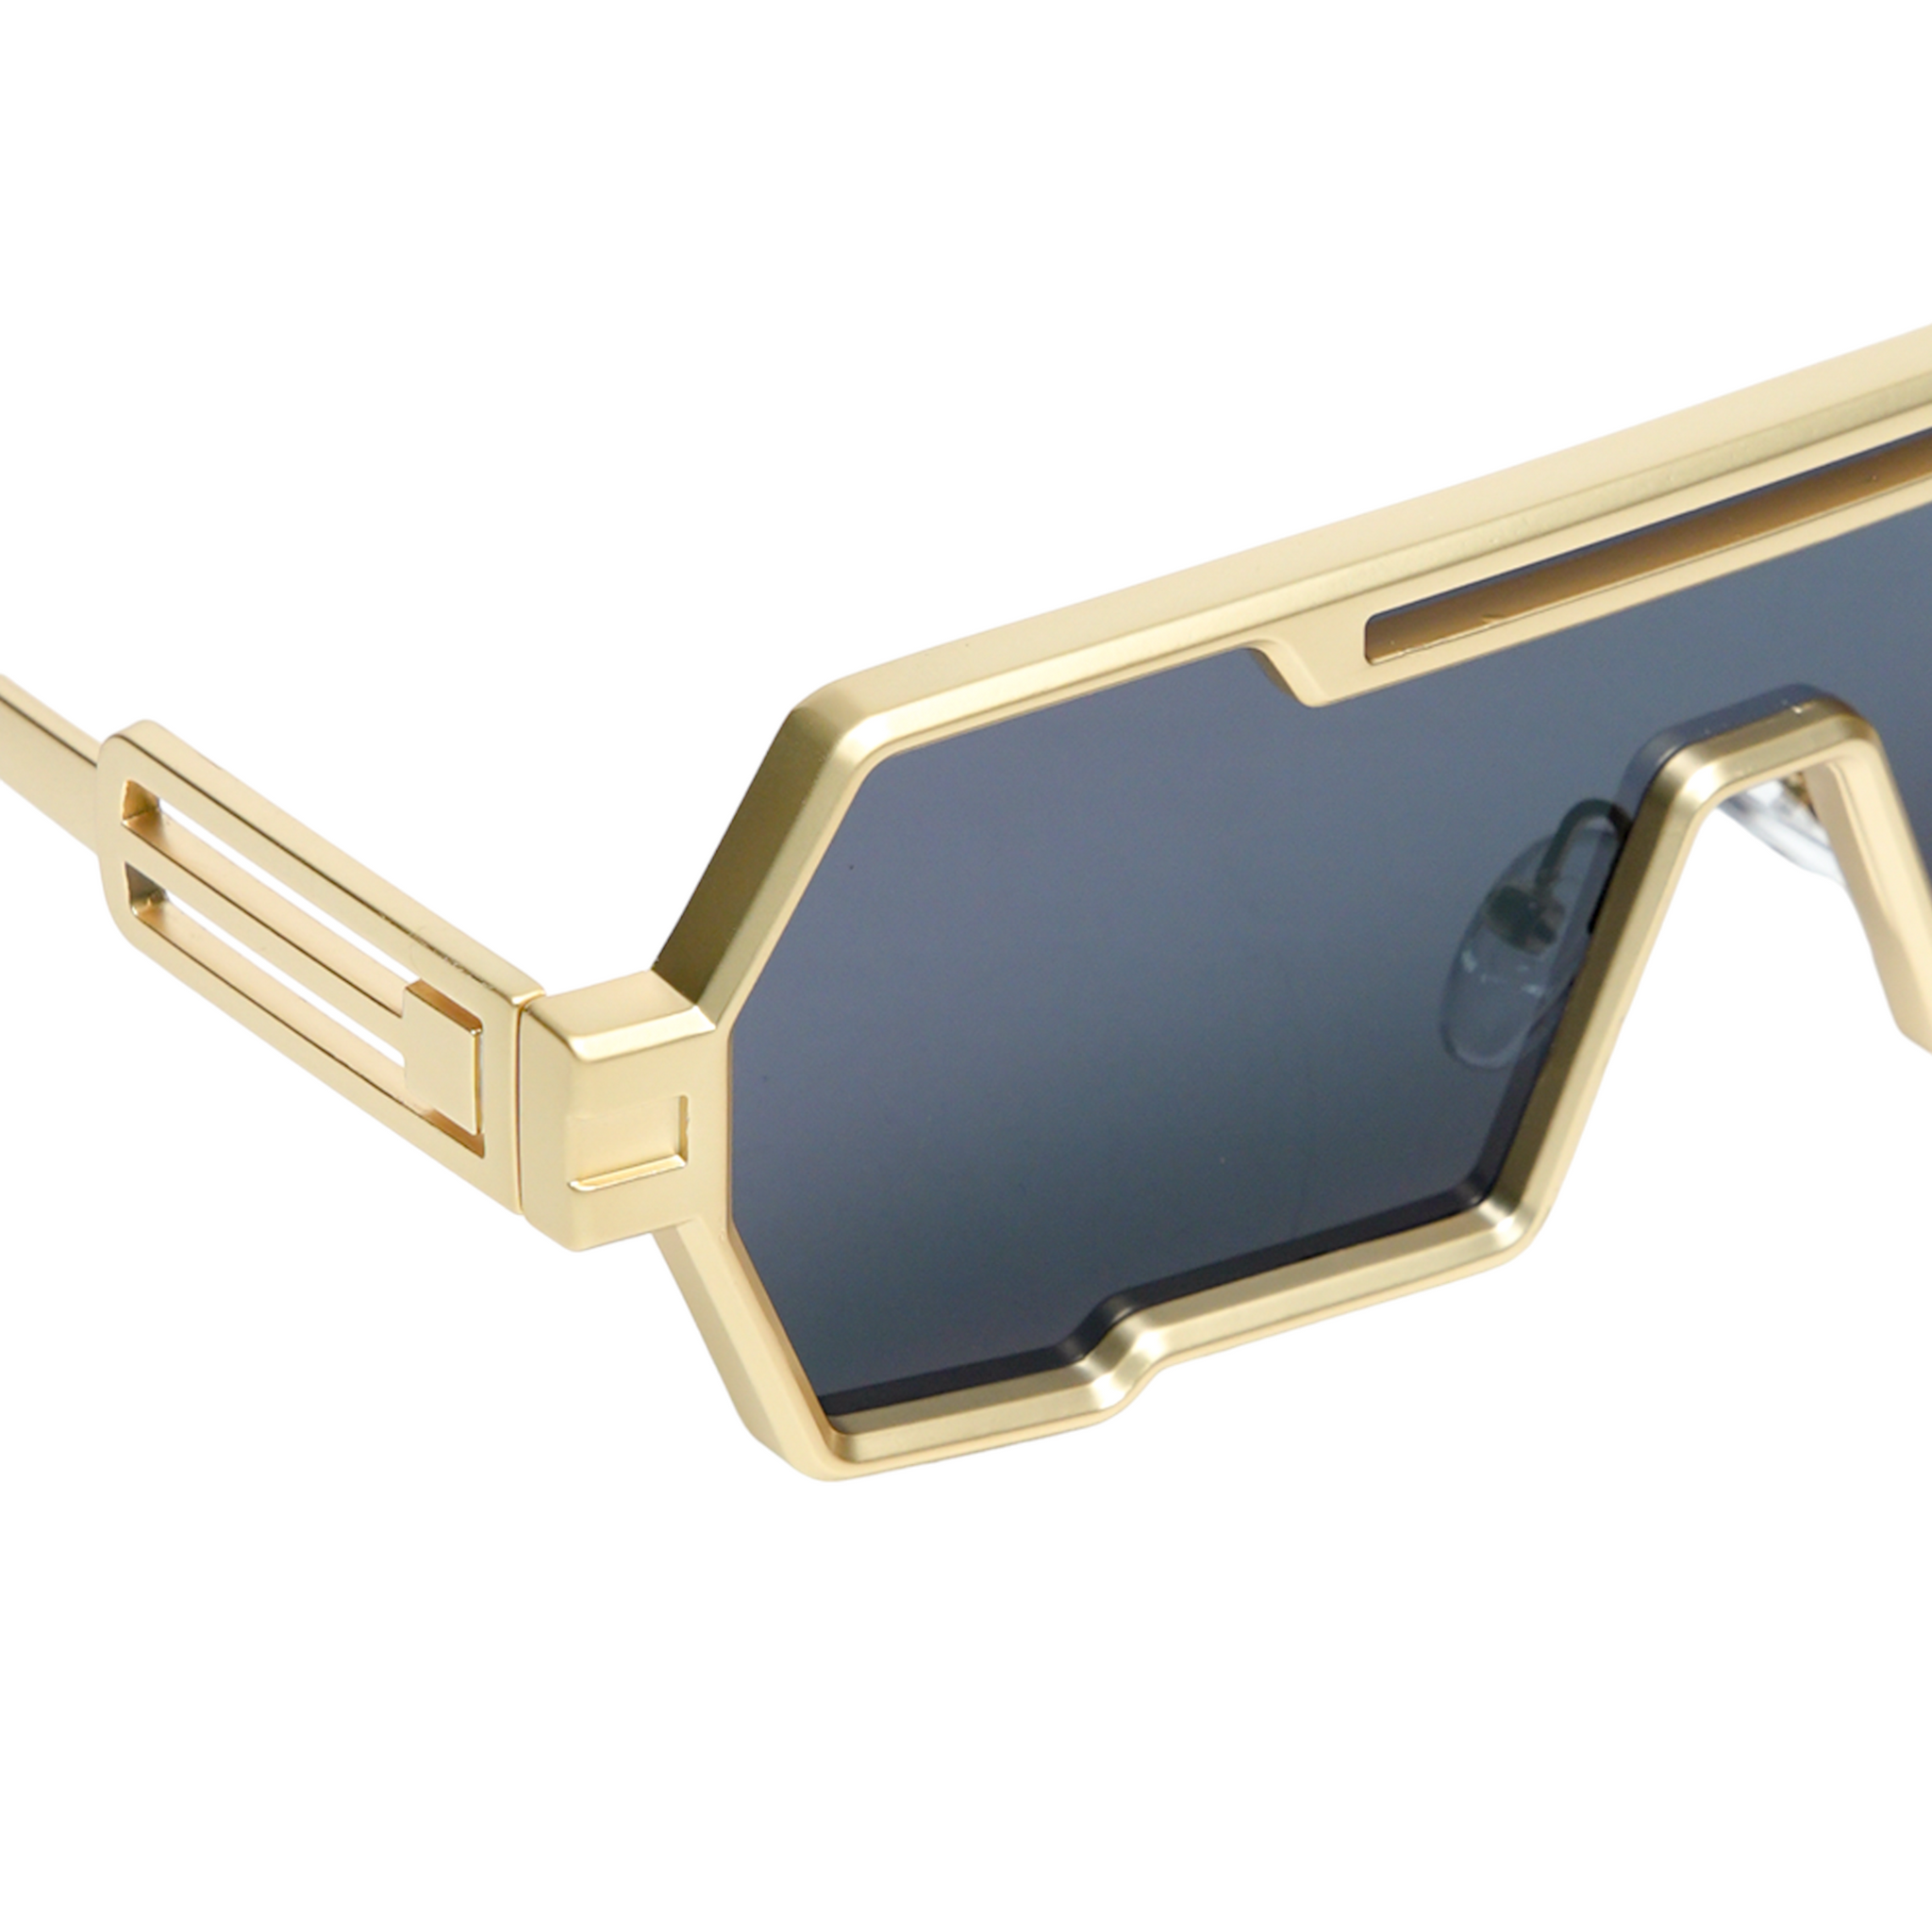 Chokore Trendy Steampunk Metal Sunglasses (Gold & Gray)